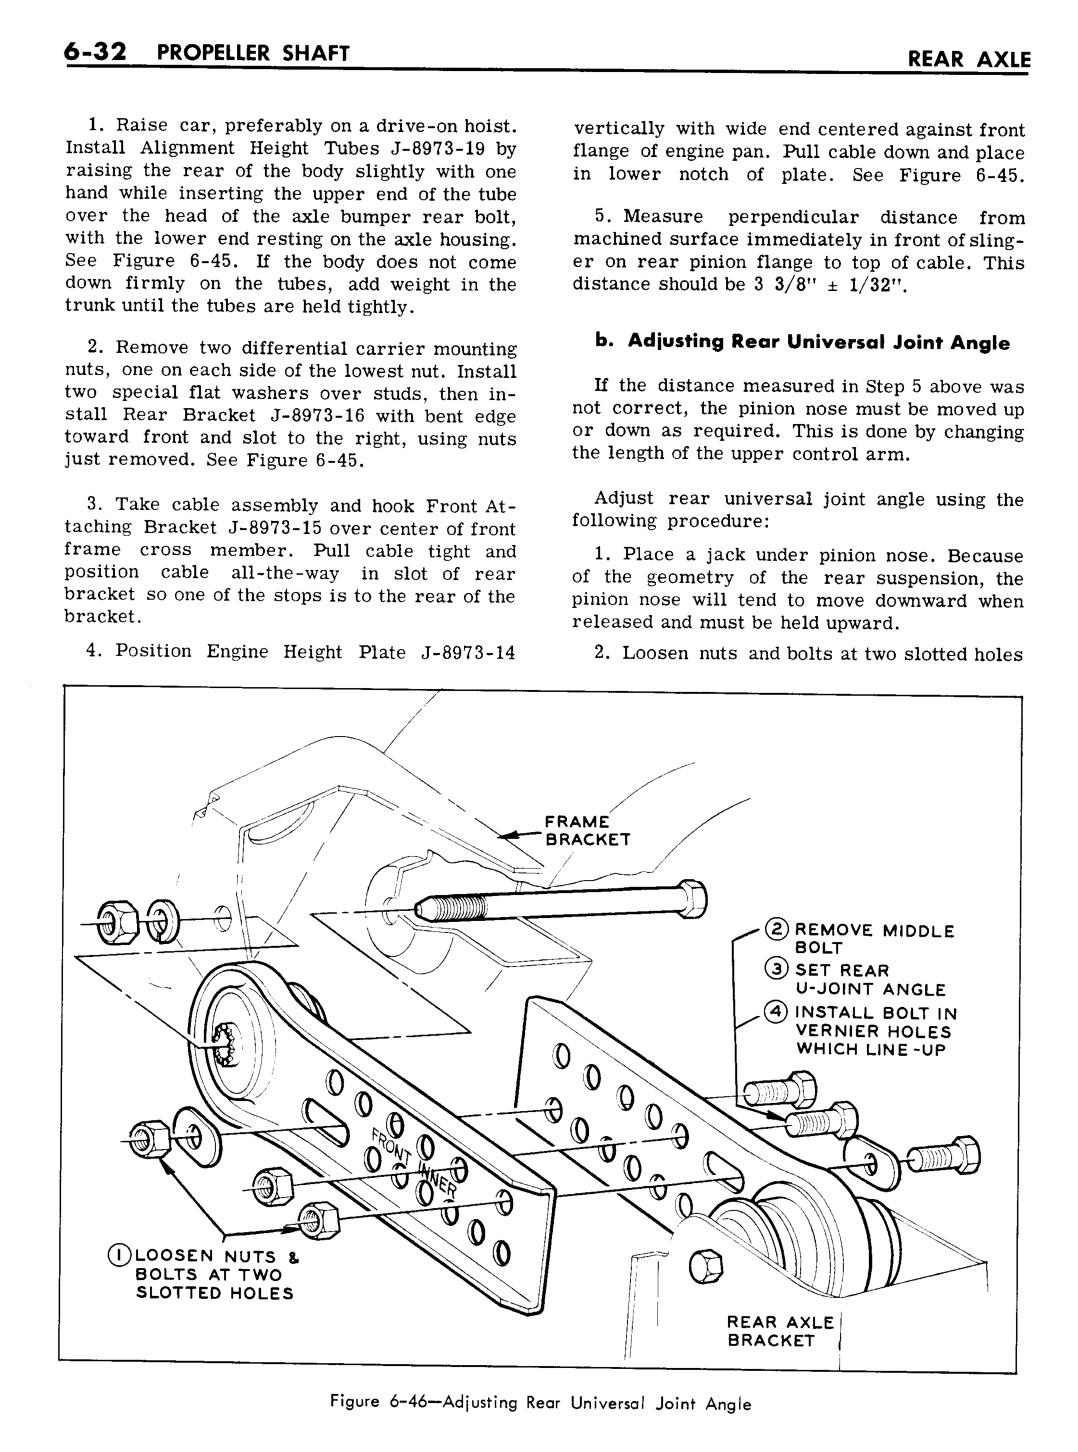 n_06 1961 Buick Shop Manual - Rear Axle-032-032.jpg